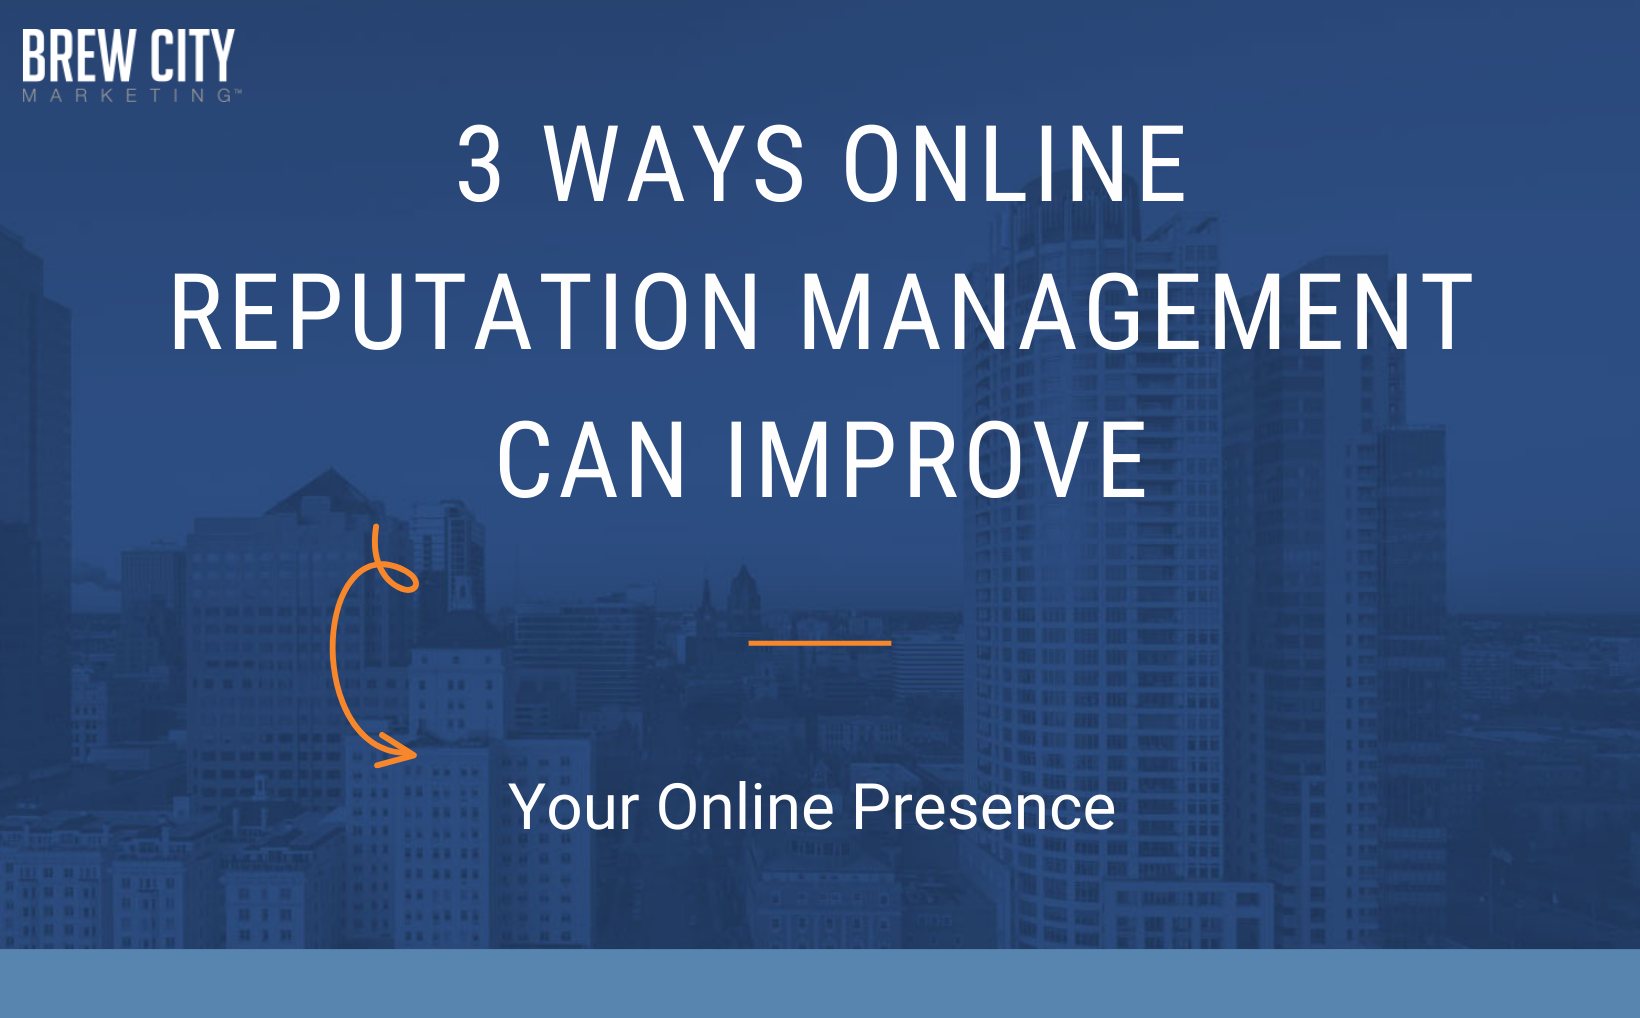 3 ways online reputation management can improve your online presence